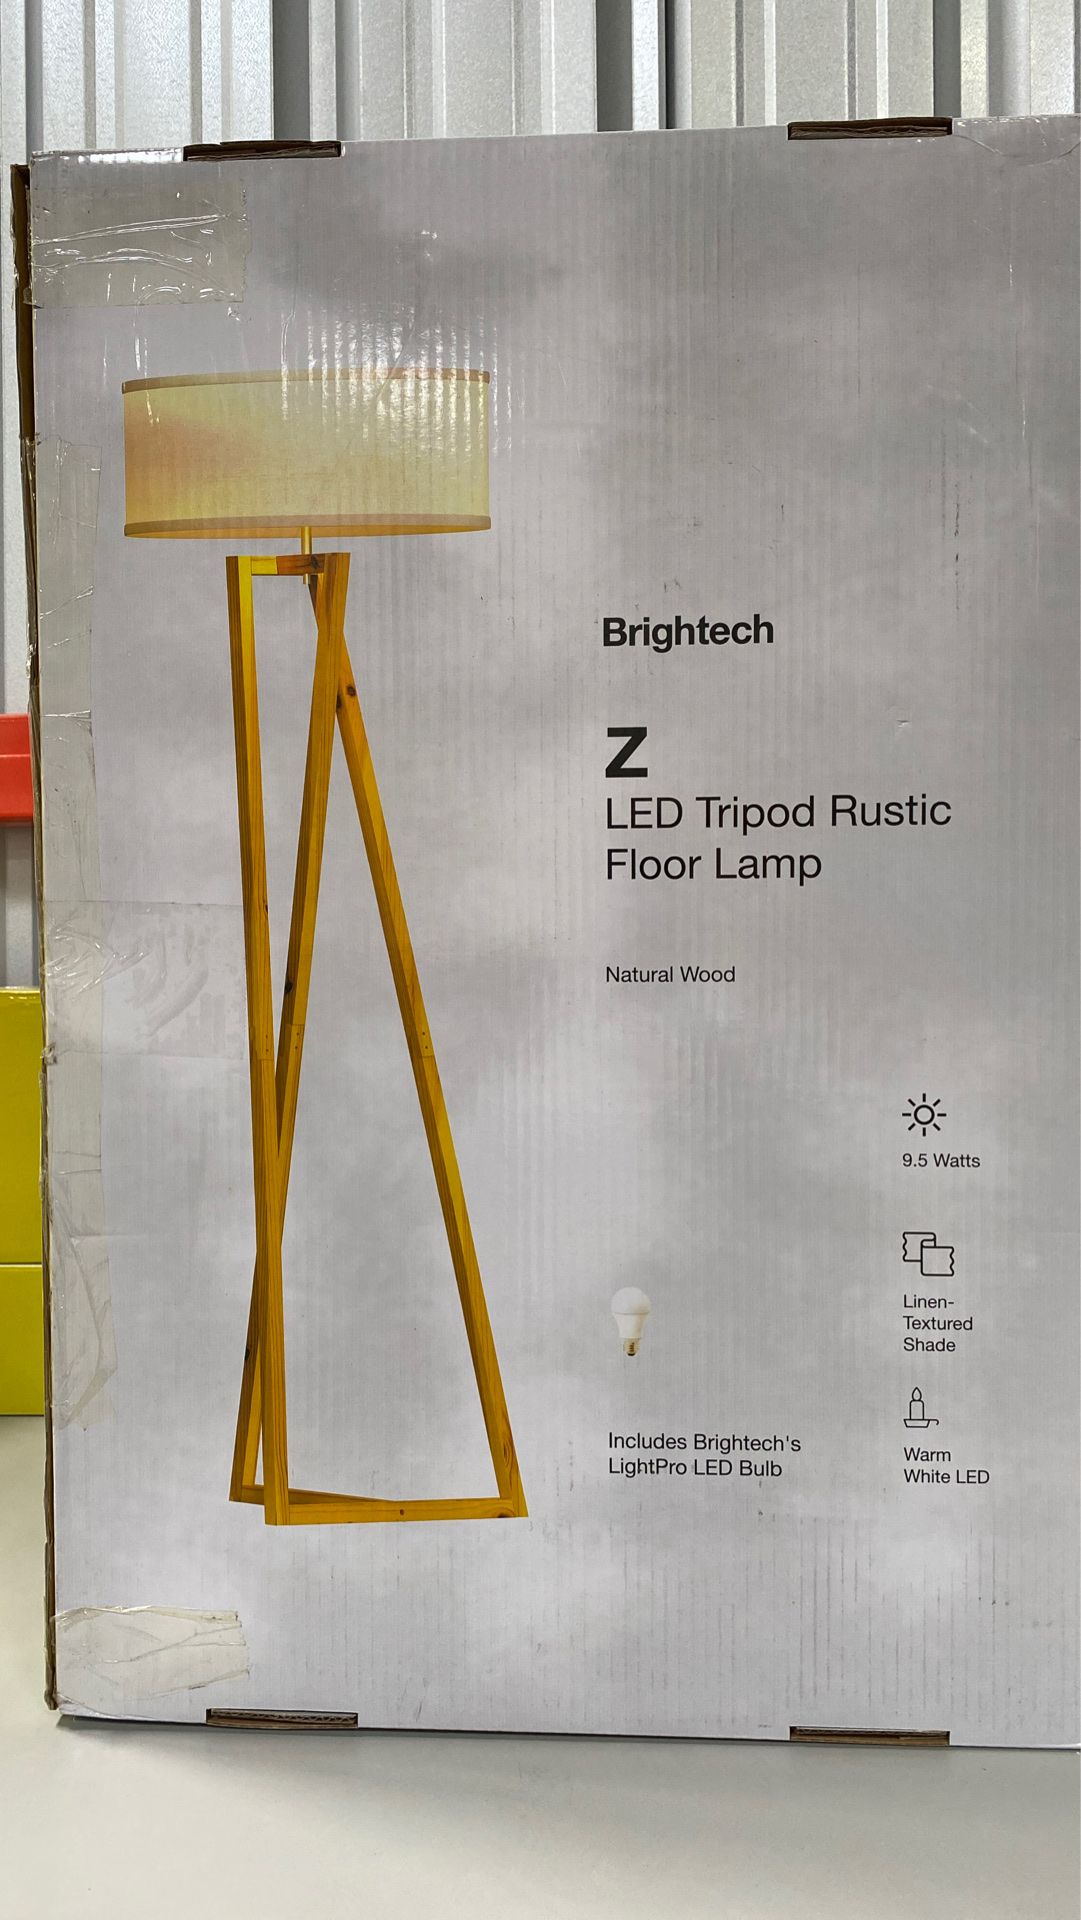 Brightech Z LED Tripod Rustic Floor Lamp